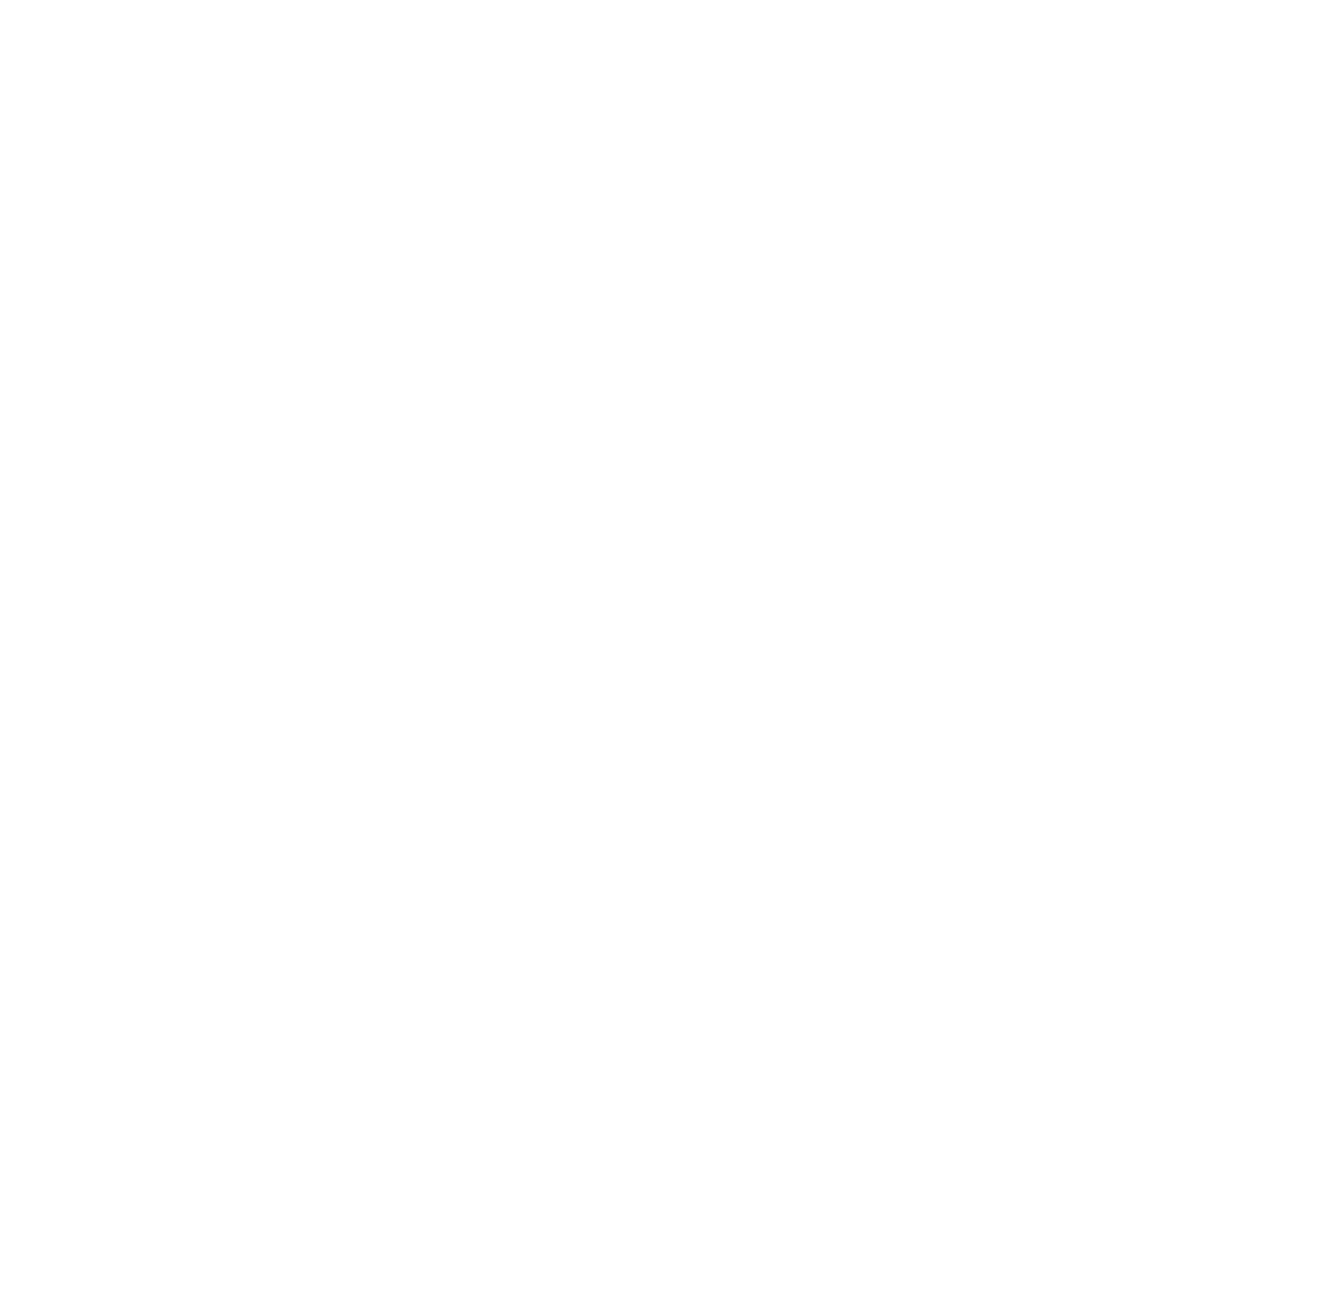 Little Britches